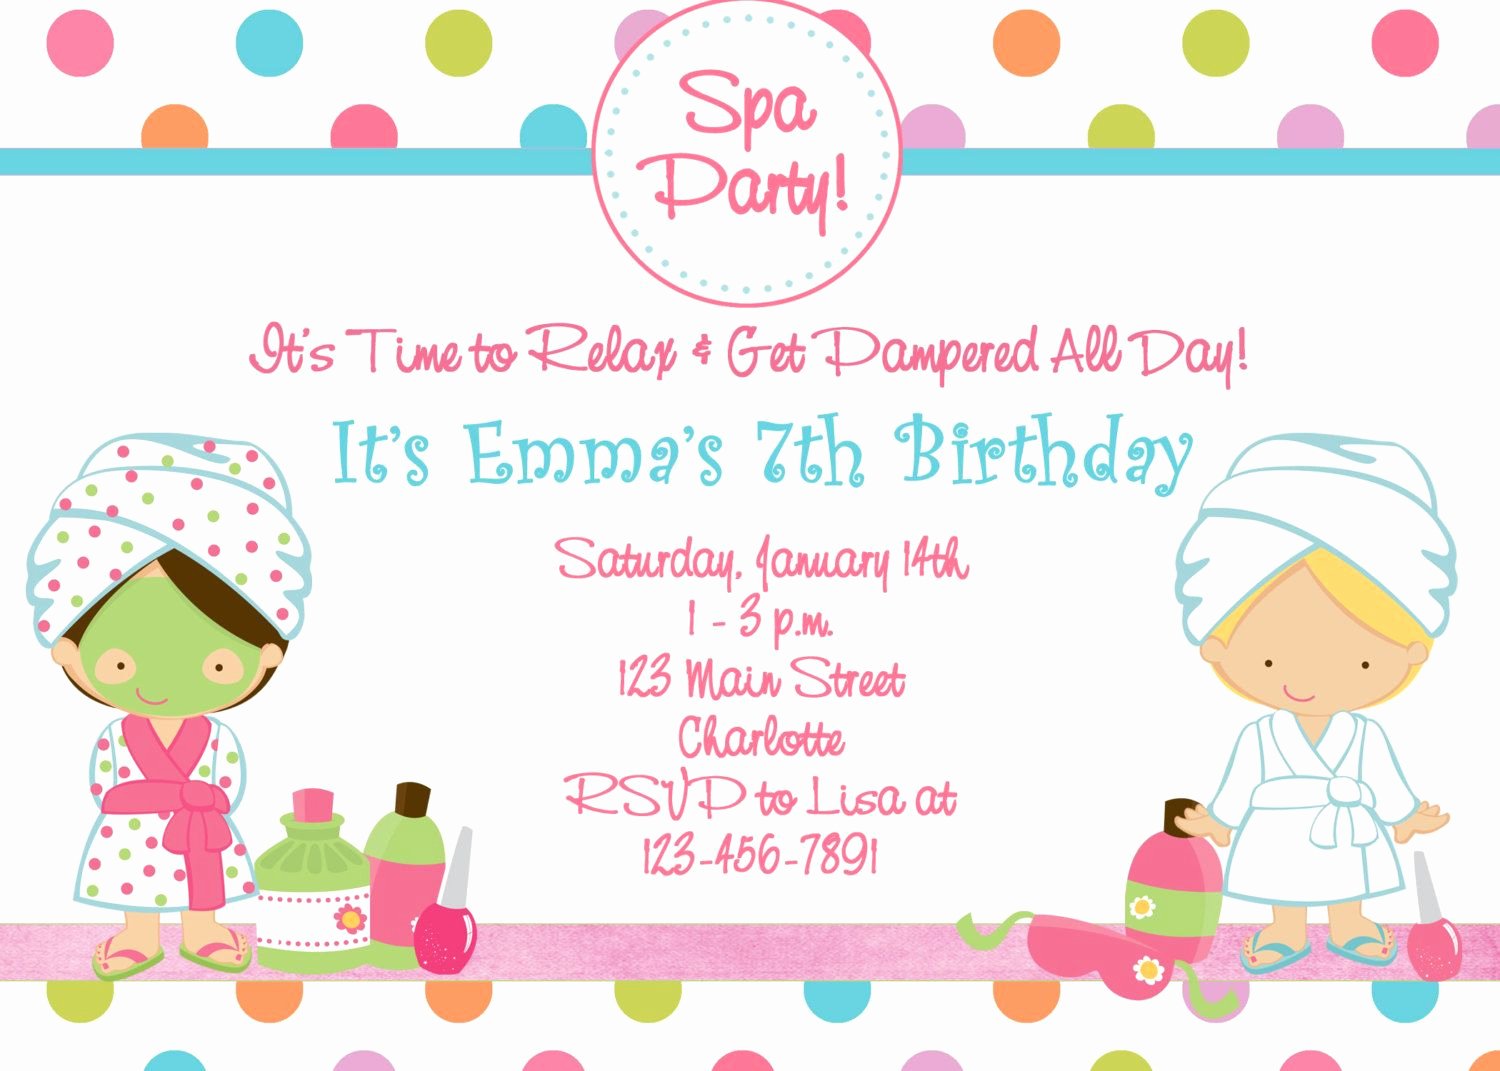 Spa Birthday Party Invitations Luxury Free Printable Spa Birthday Party Invitations Spa at Home